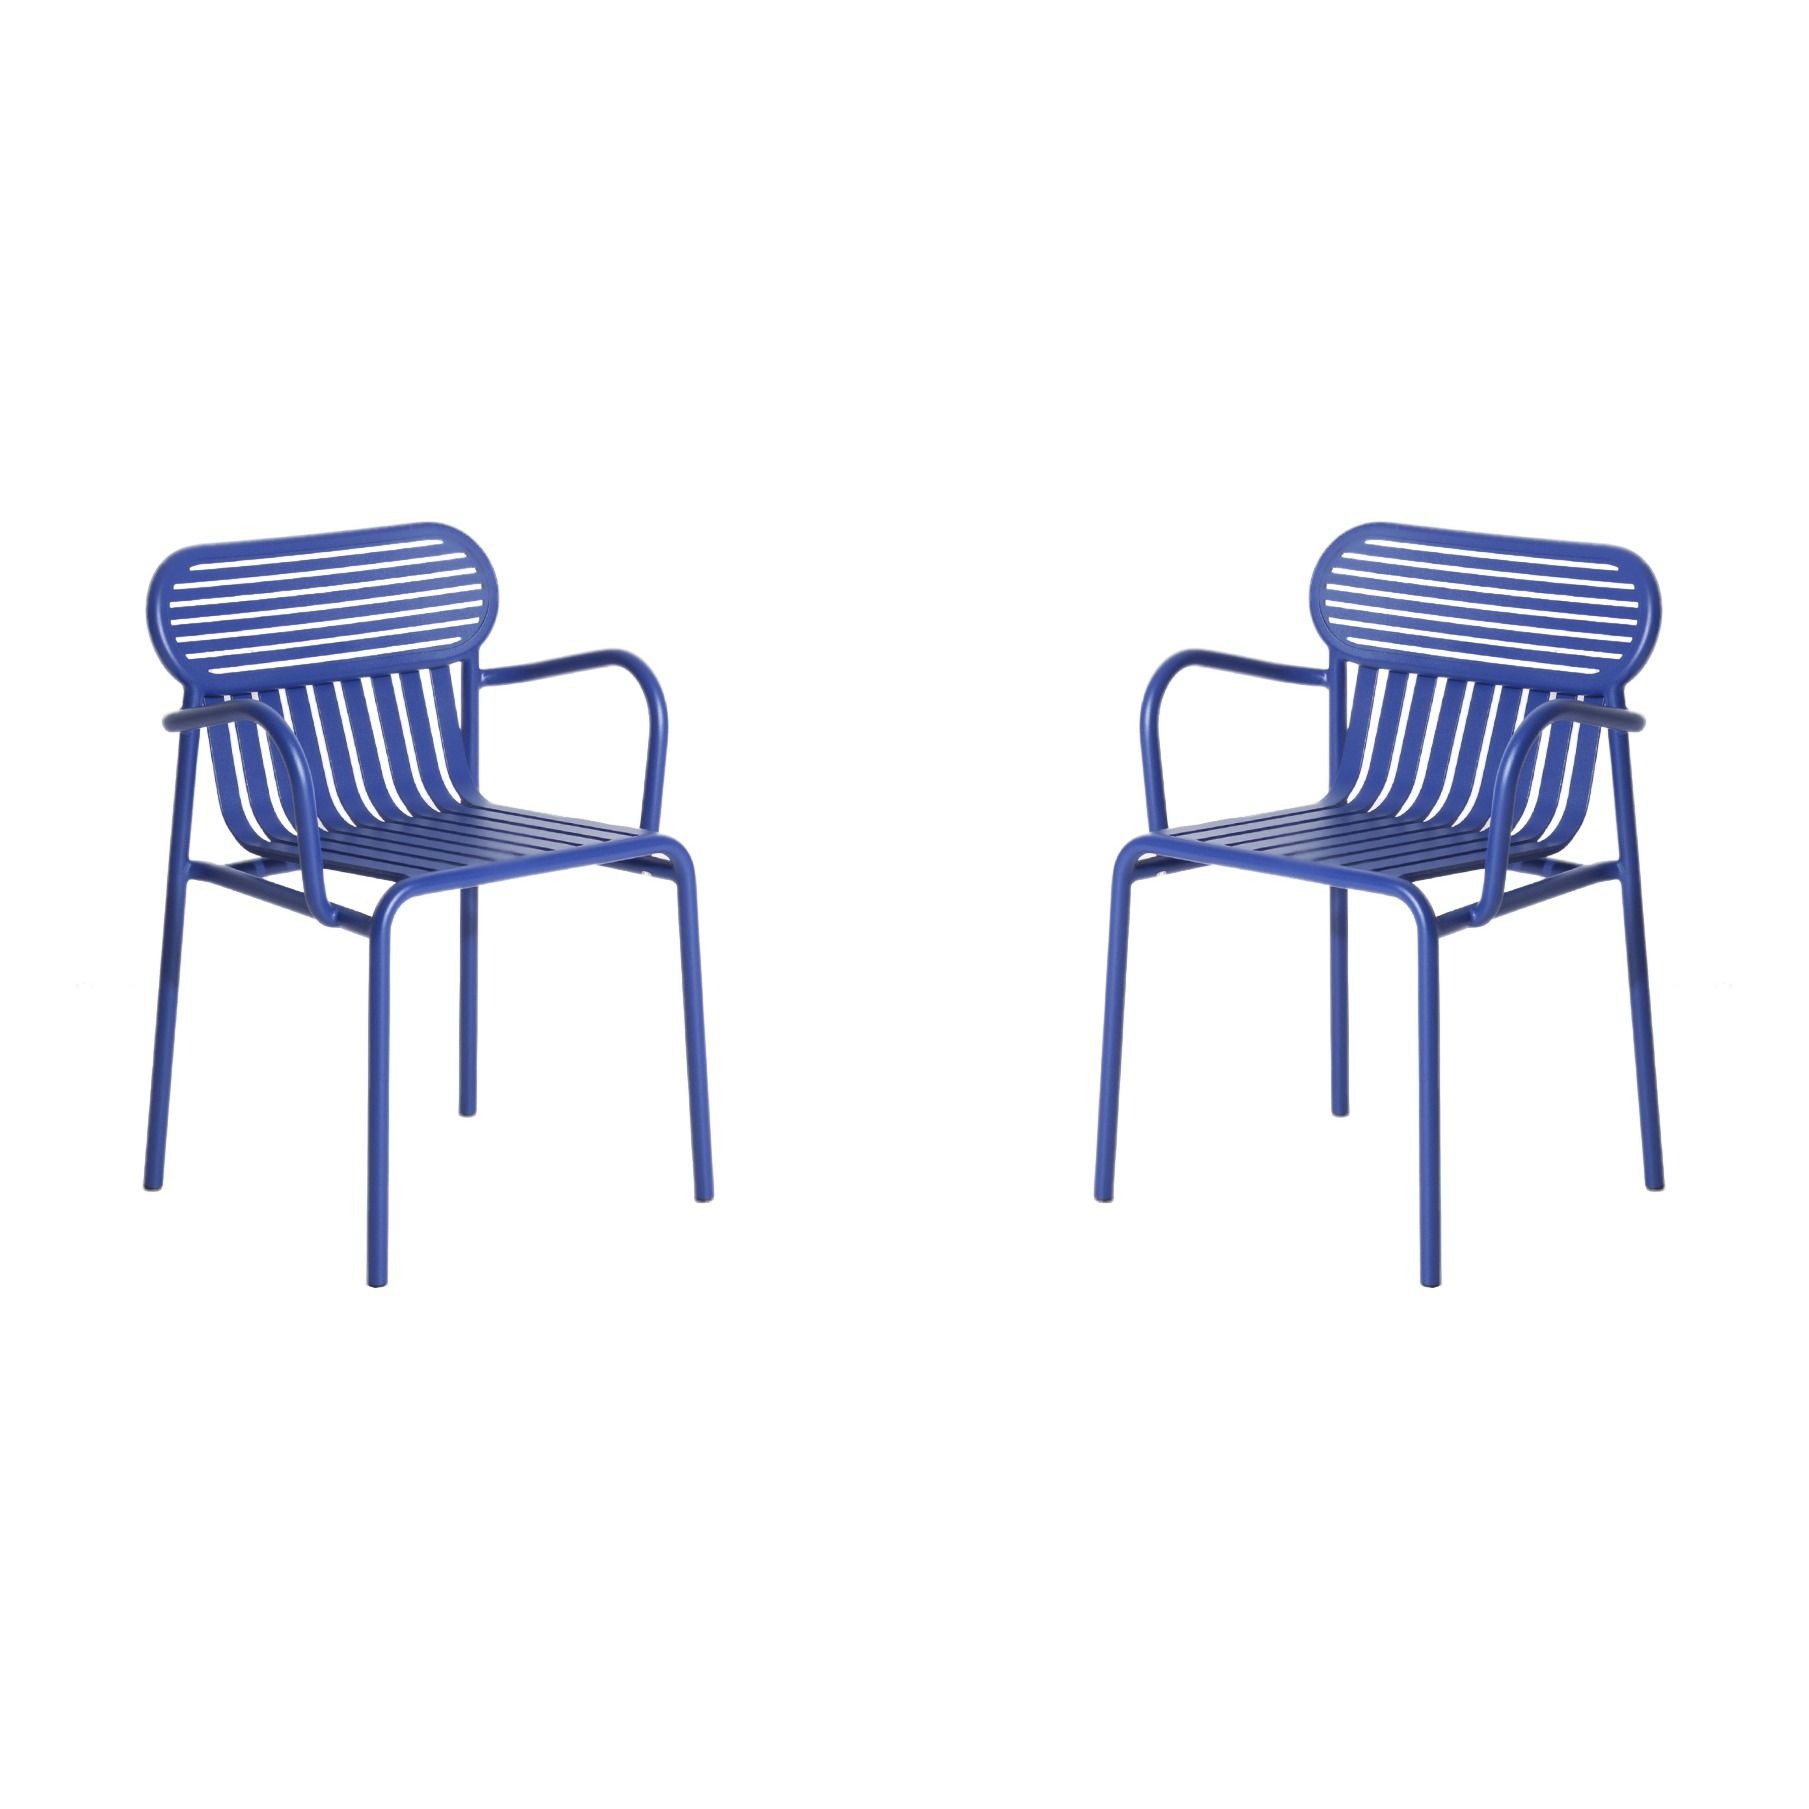 Petite friture - Chaise bridge Week-end - Lot de 2 - Bleu